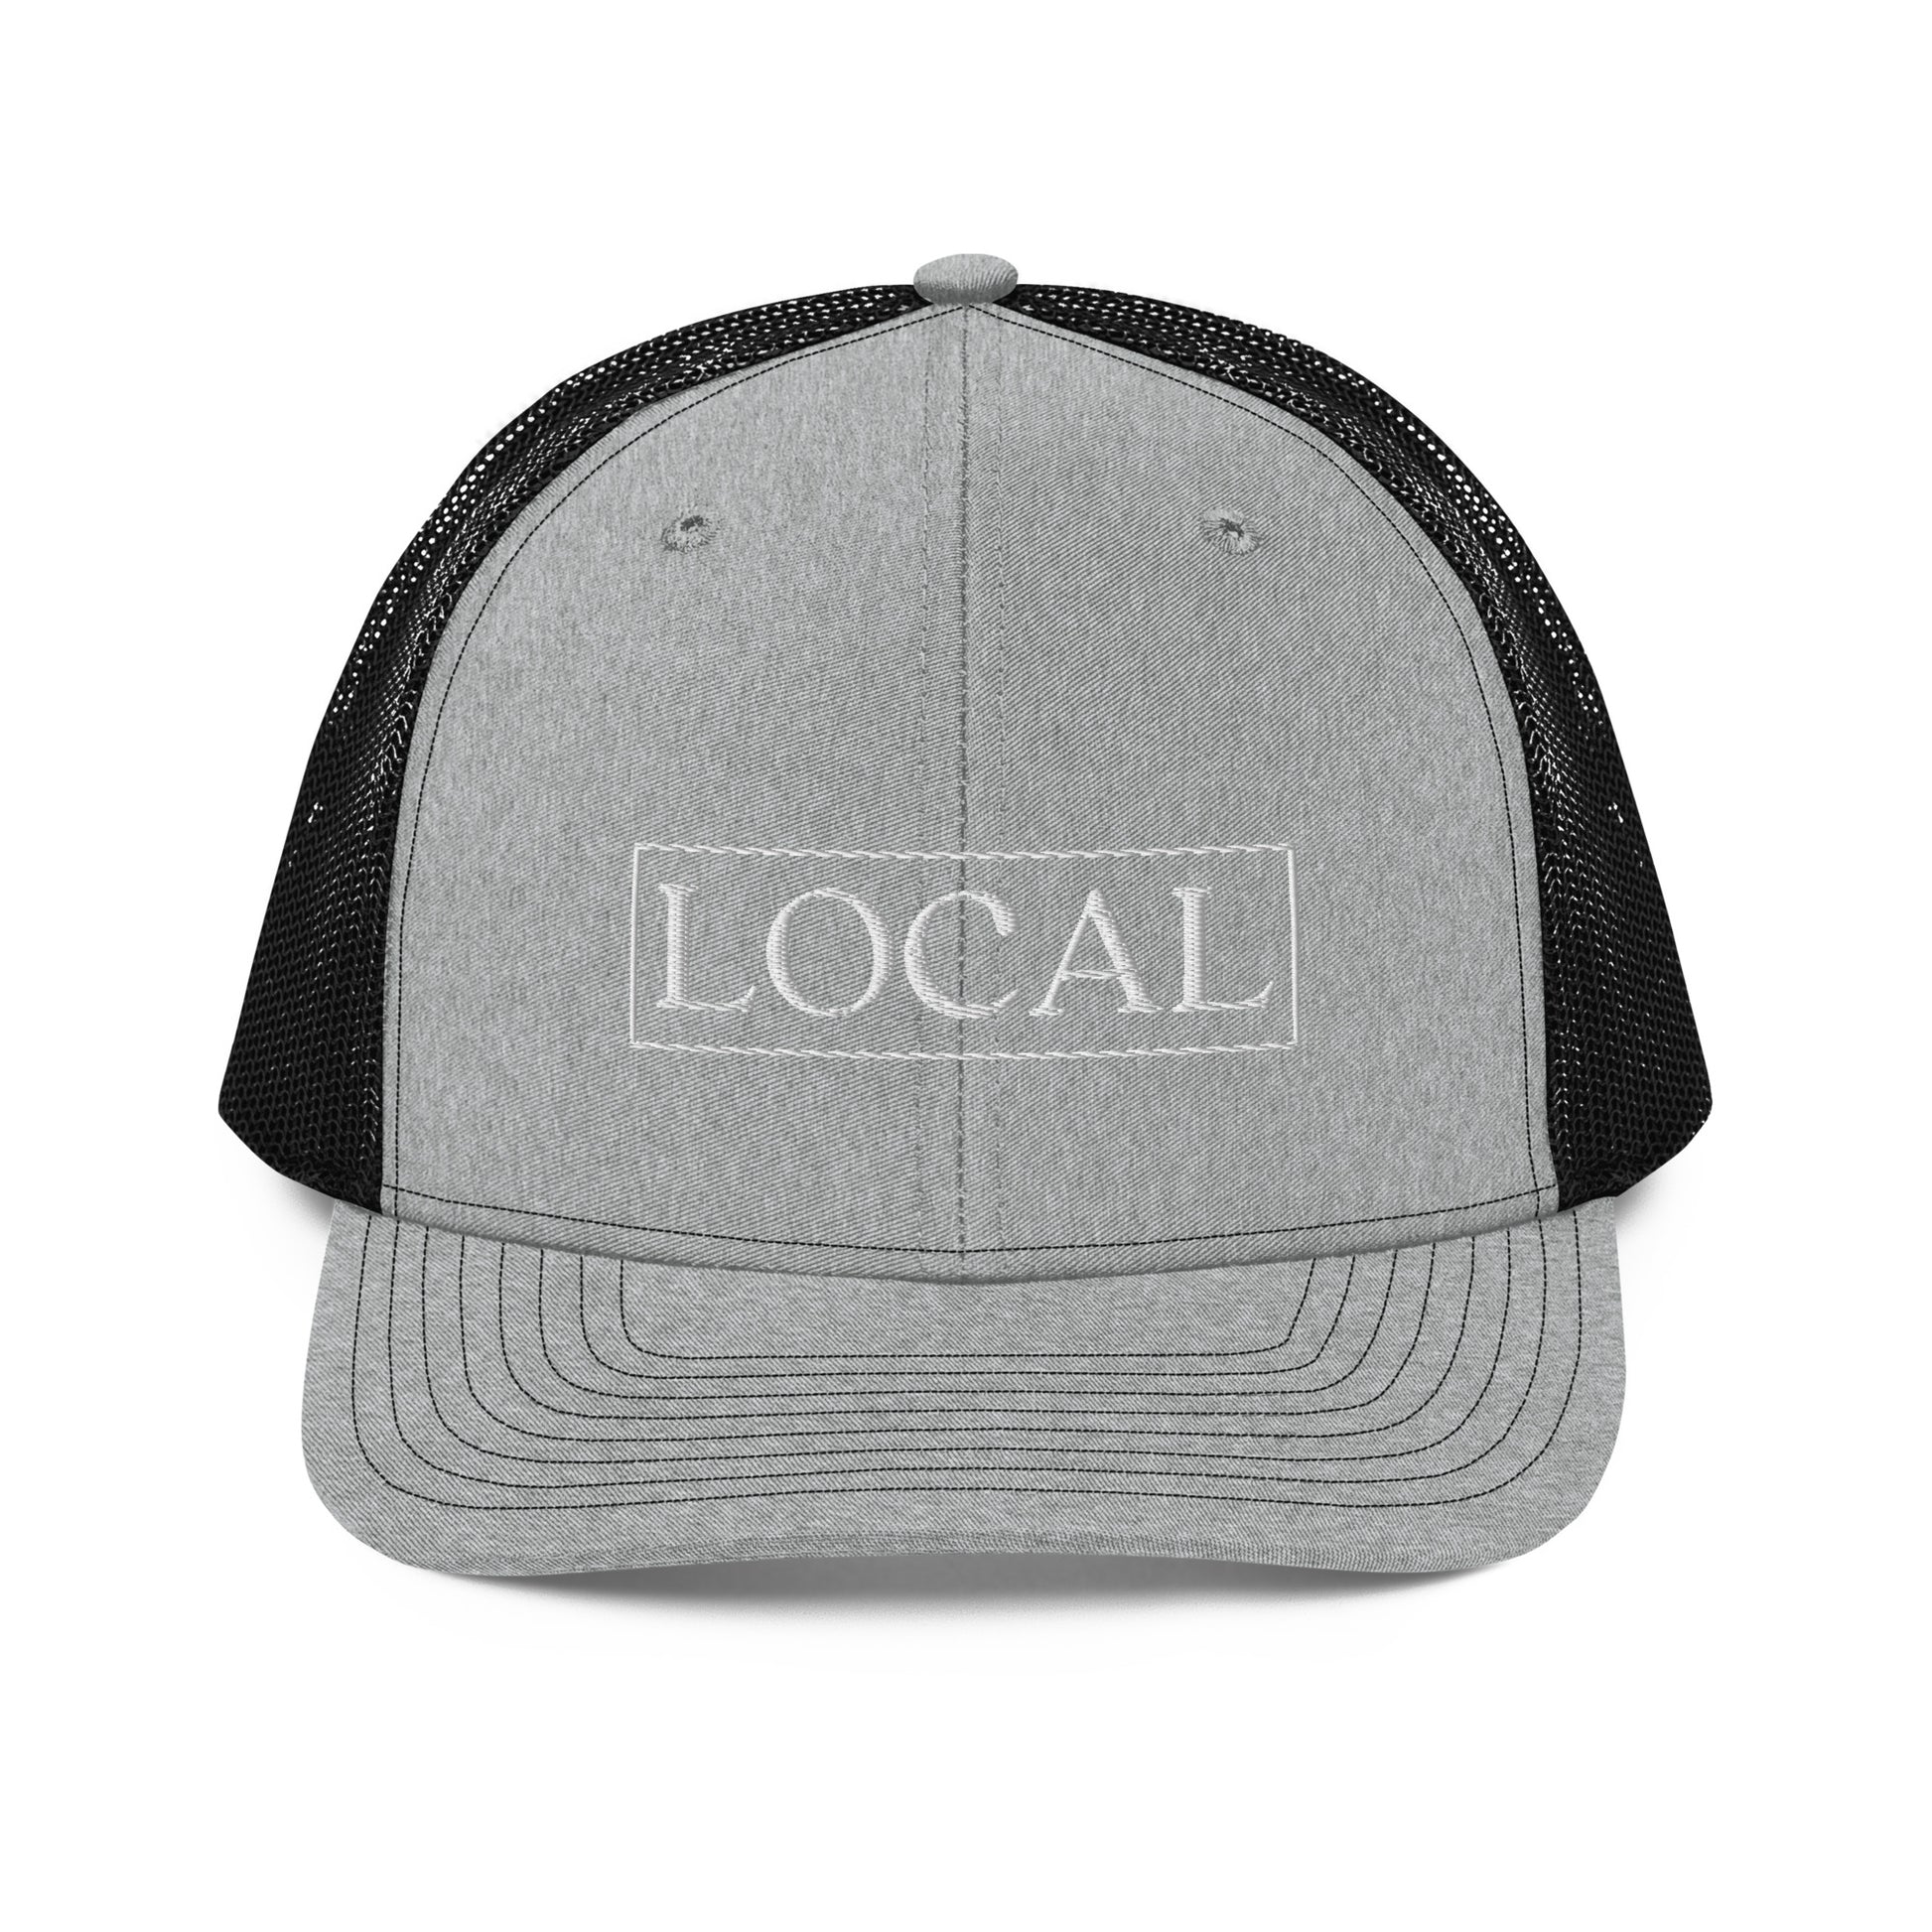 Local Florida Hat - Grey